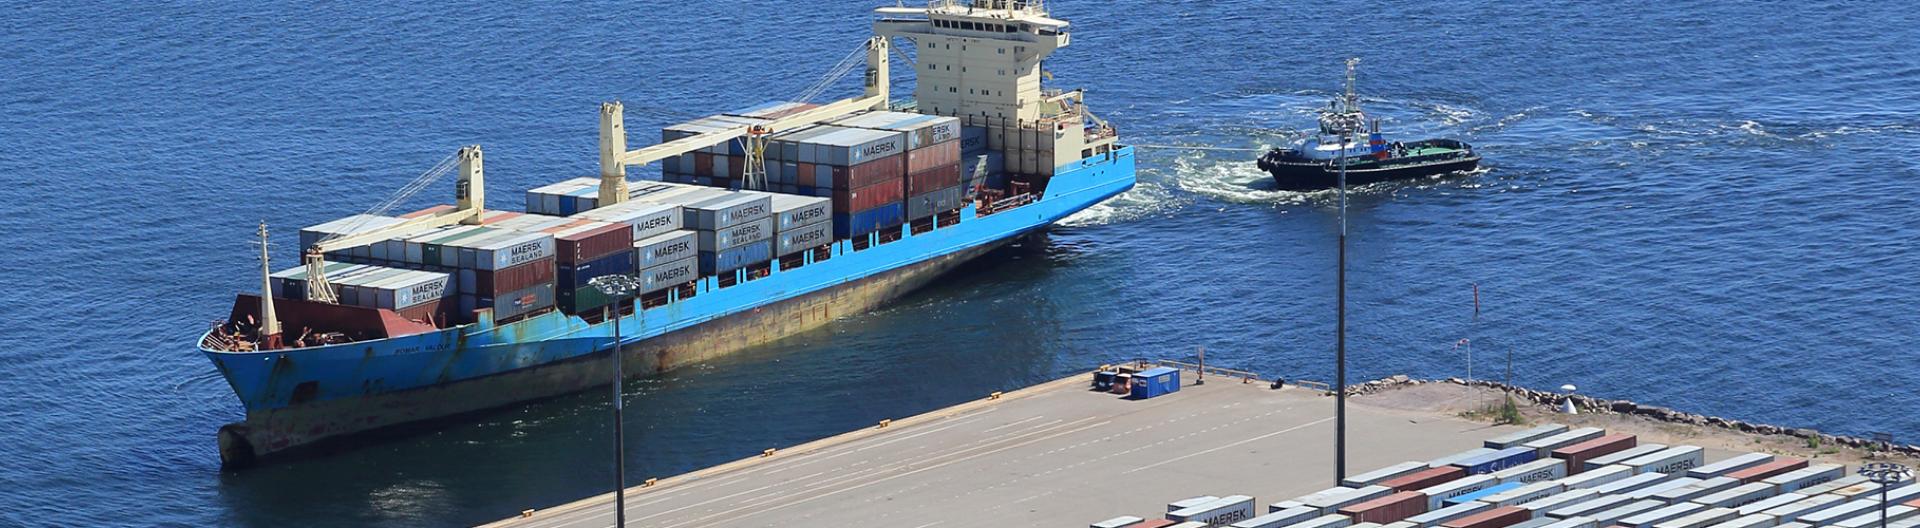 HaminaKotka is the biggest export port in Finnish sea transport